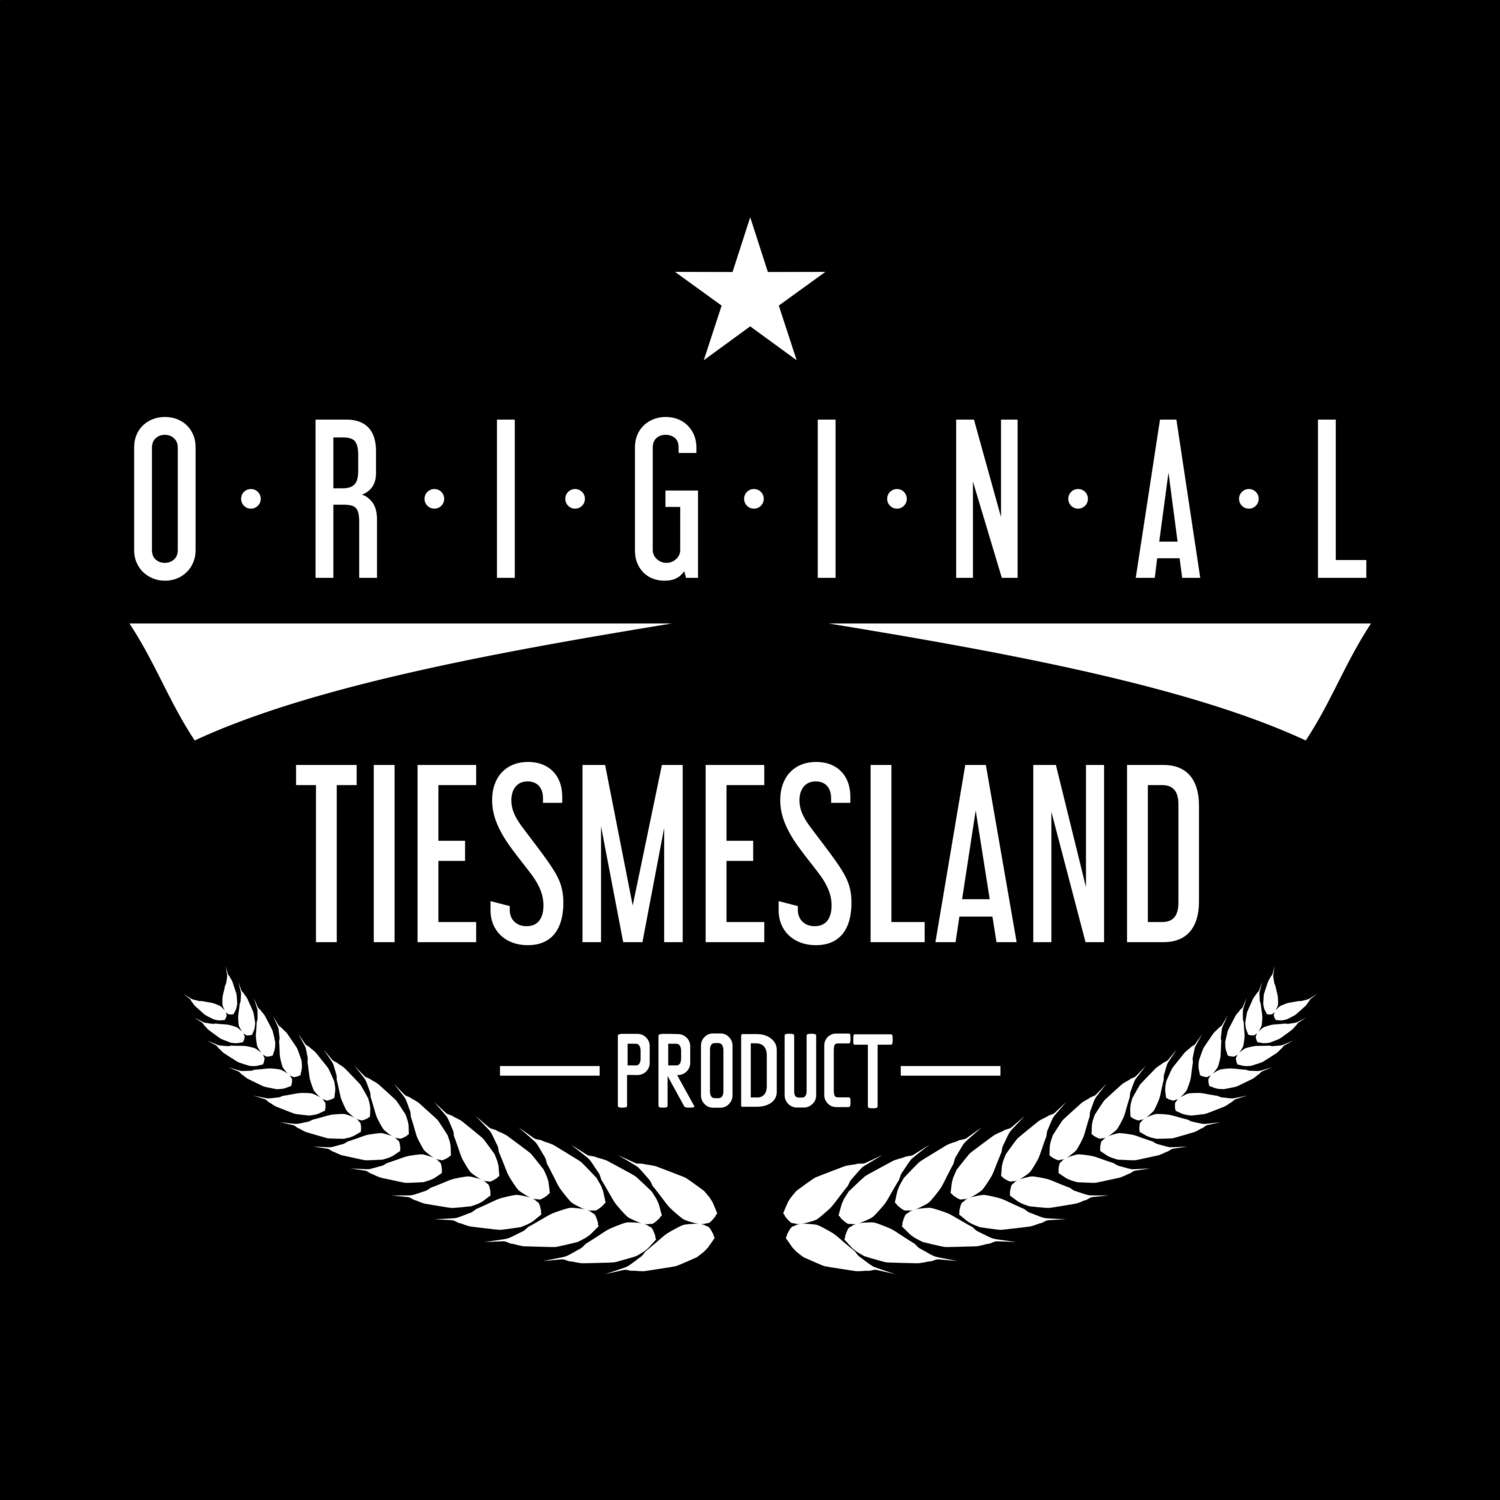 Tiesmesland T-Shirt »Original Product«